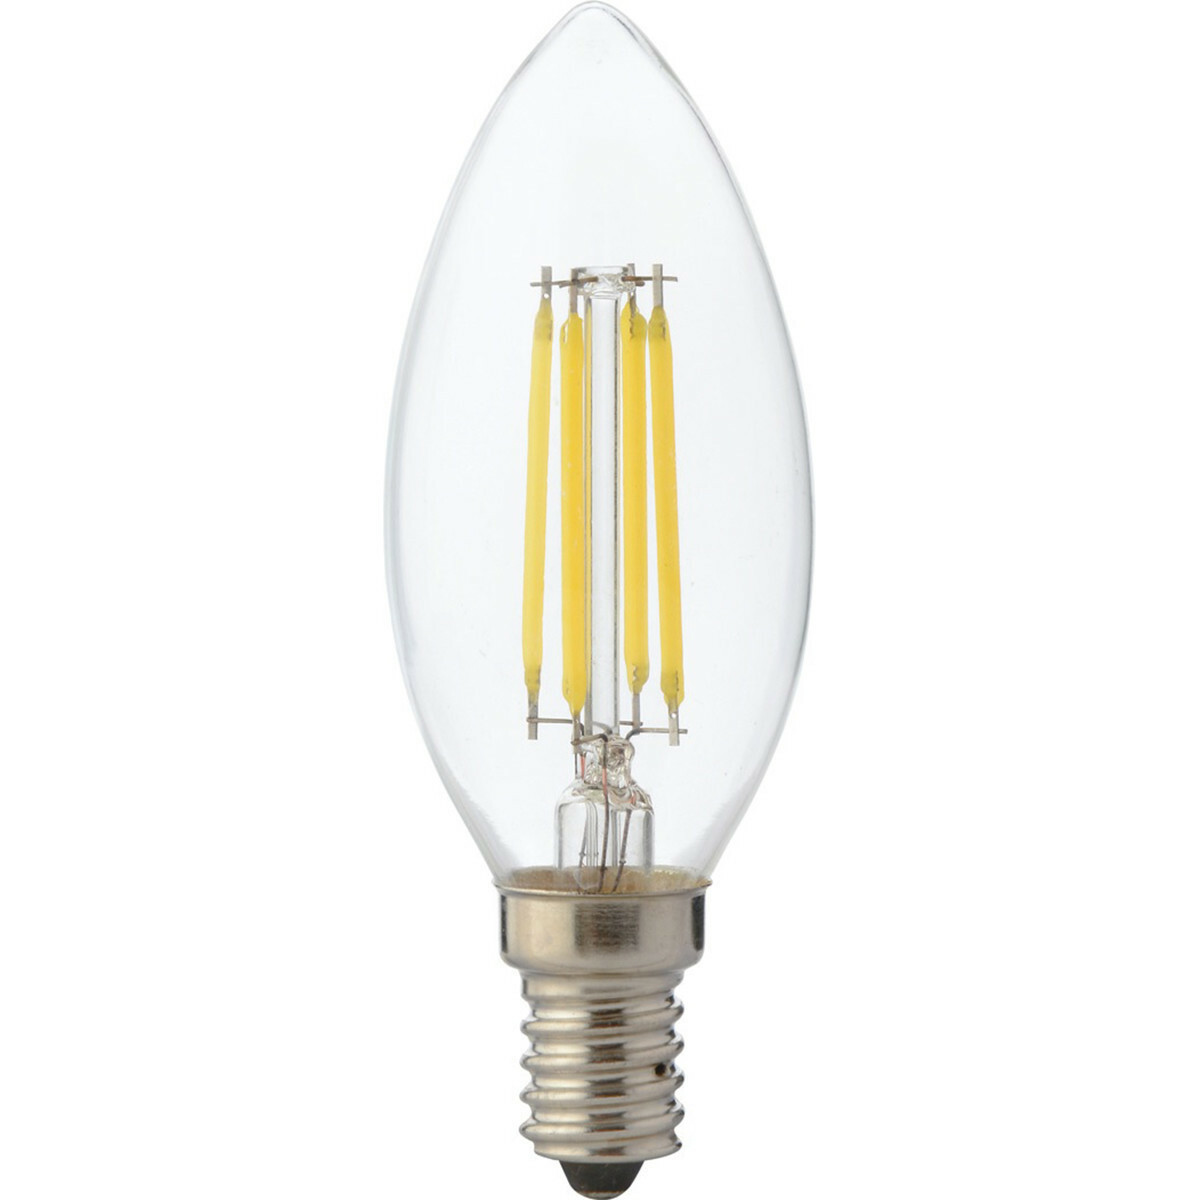 Leerling mot amateur LED Lamp - Kaarslamp - Filament - E14 Fitting - 6W Dimbaar - Warm Wit 2700K  | BES LED